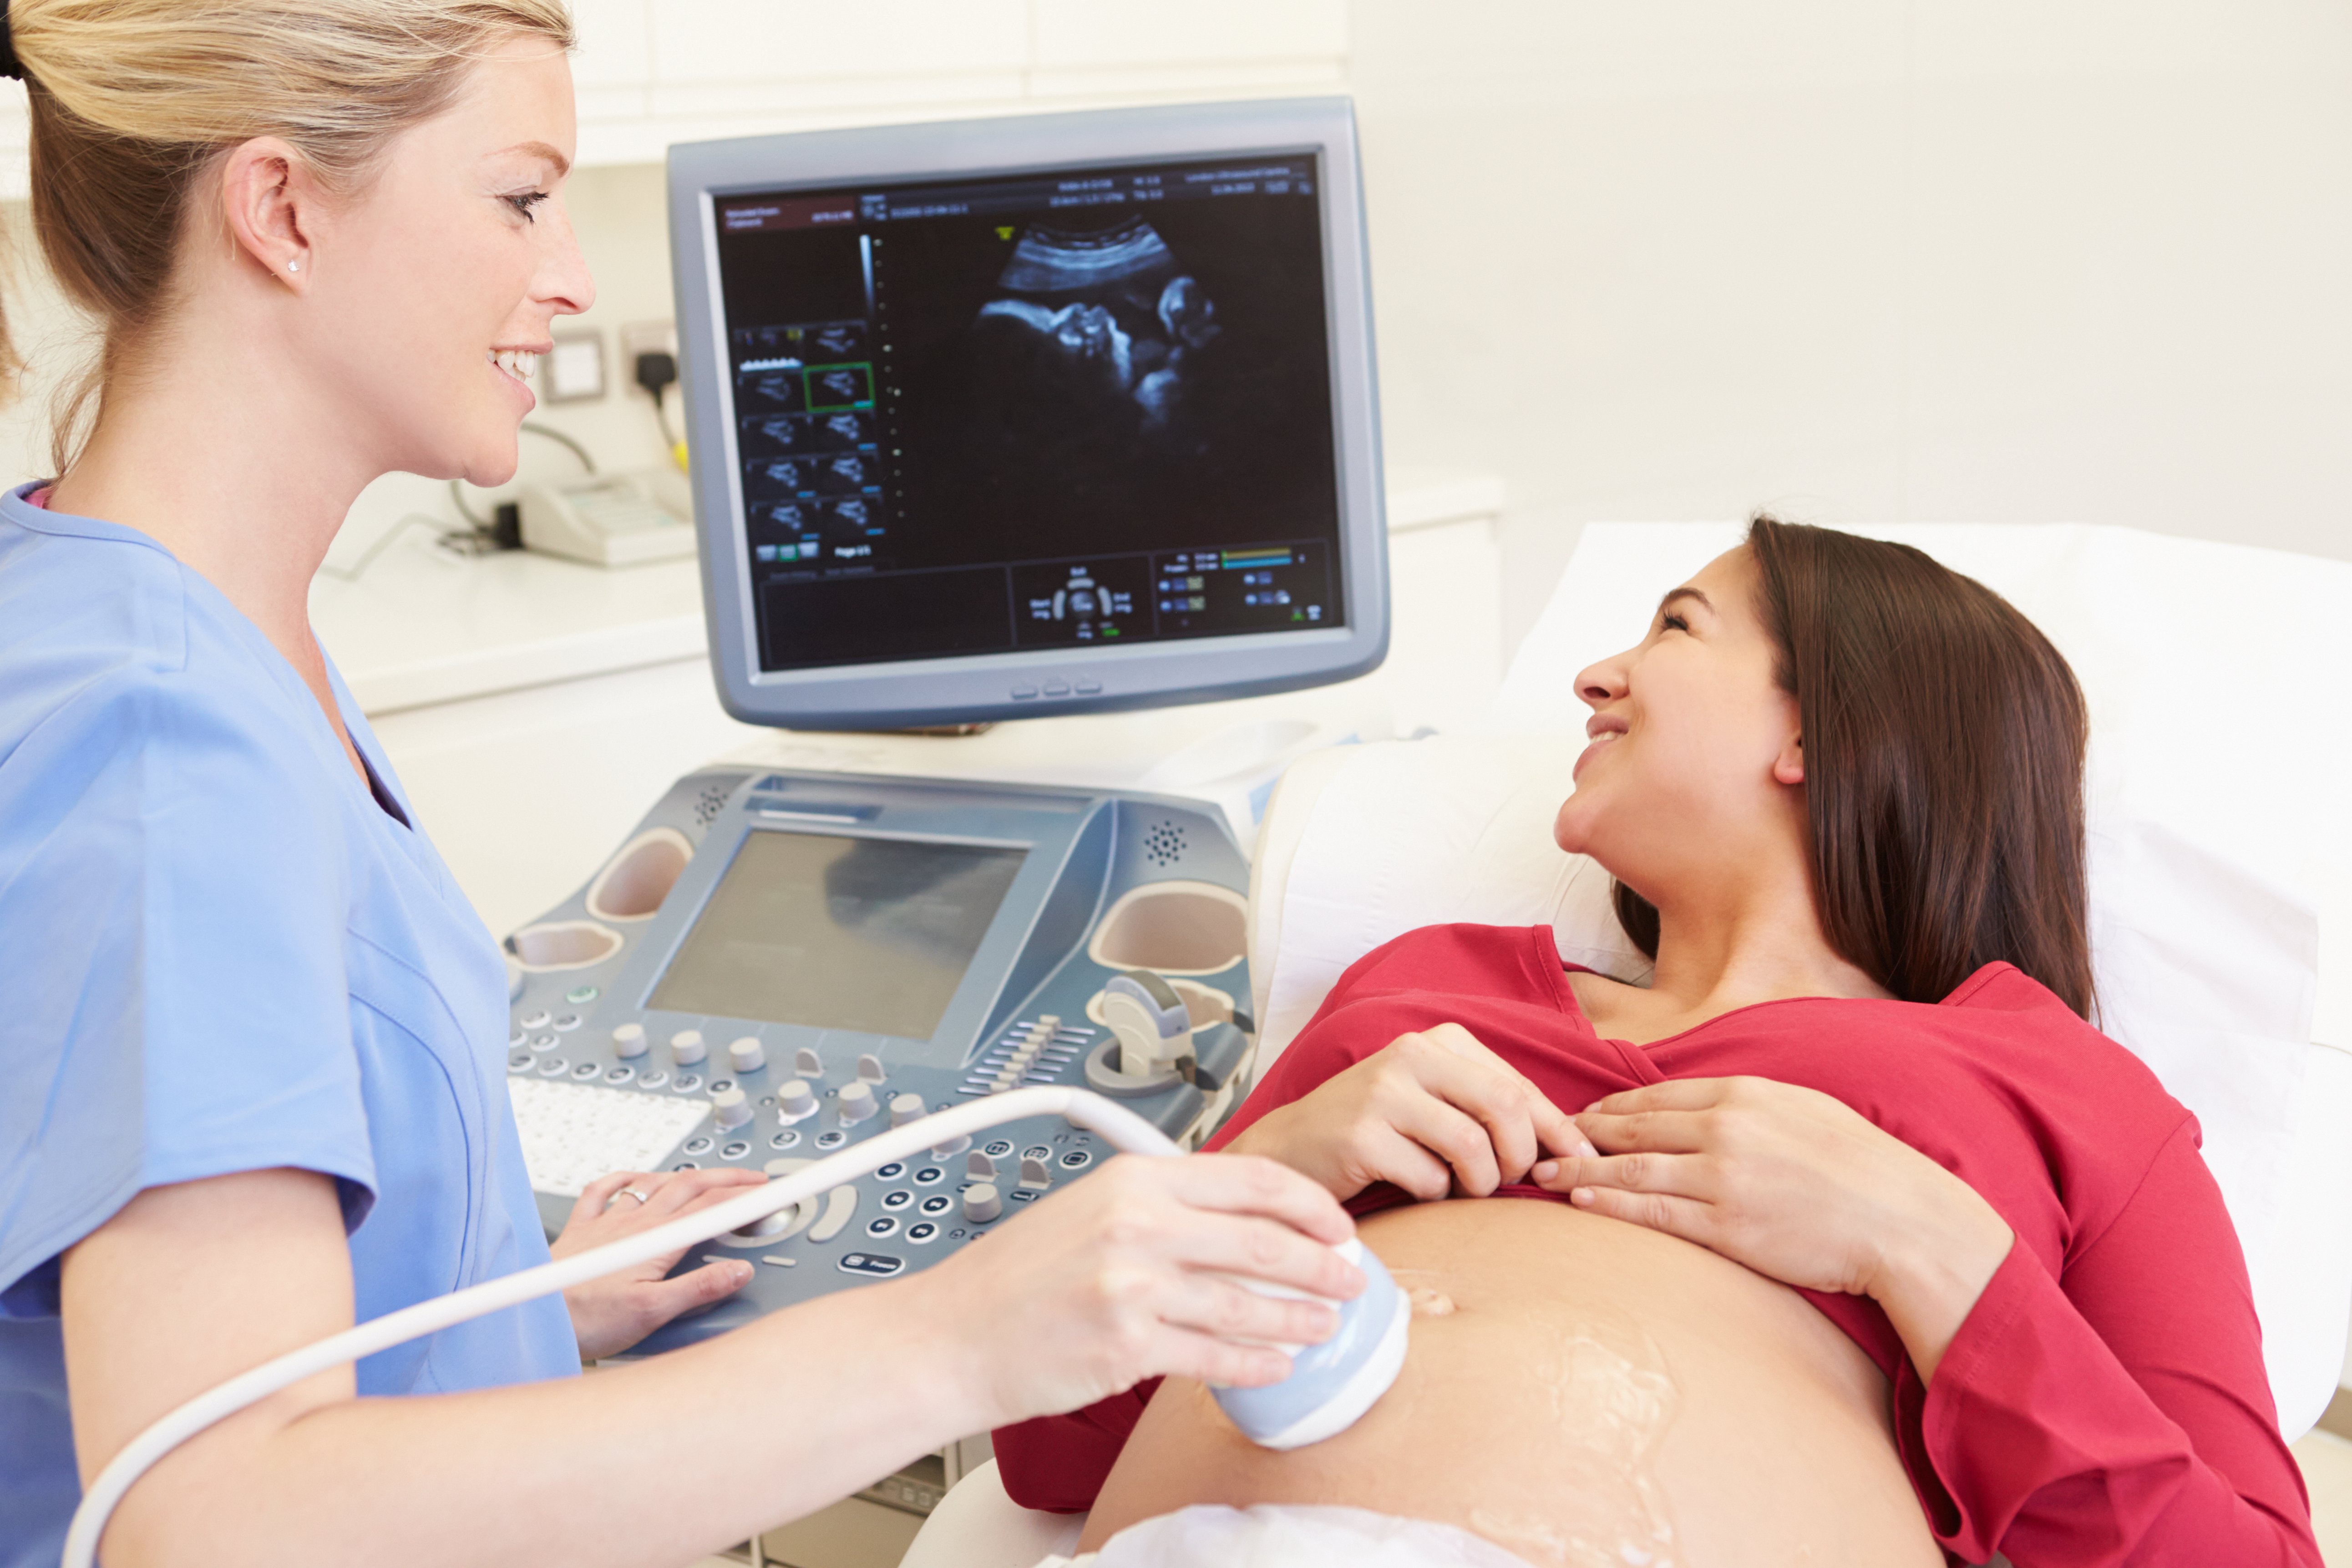 Pregnant Woman Having 4D Ultrasound Scan. | Source: Shutterstock